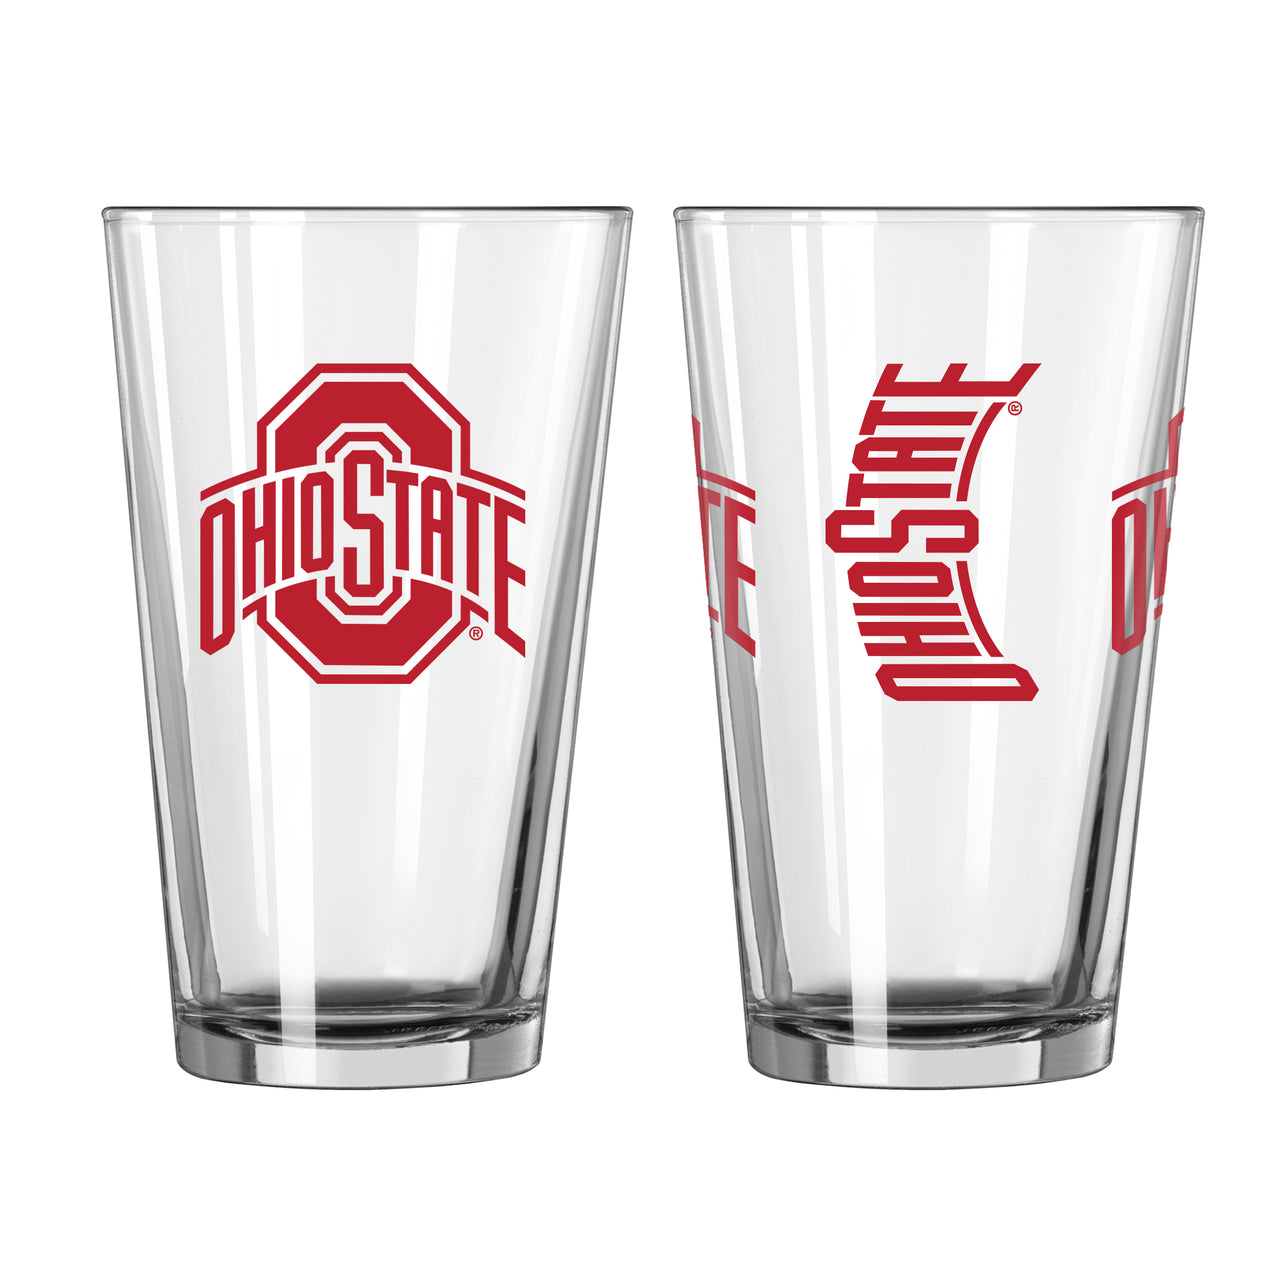 Ohio State Buckeyes Game Day Pint Glass - Dynasty Sports & Framing 